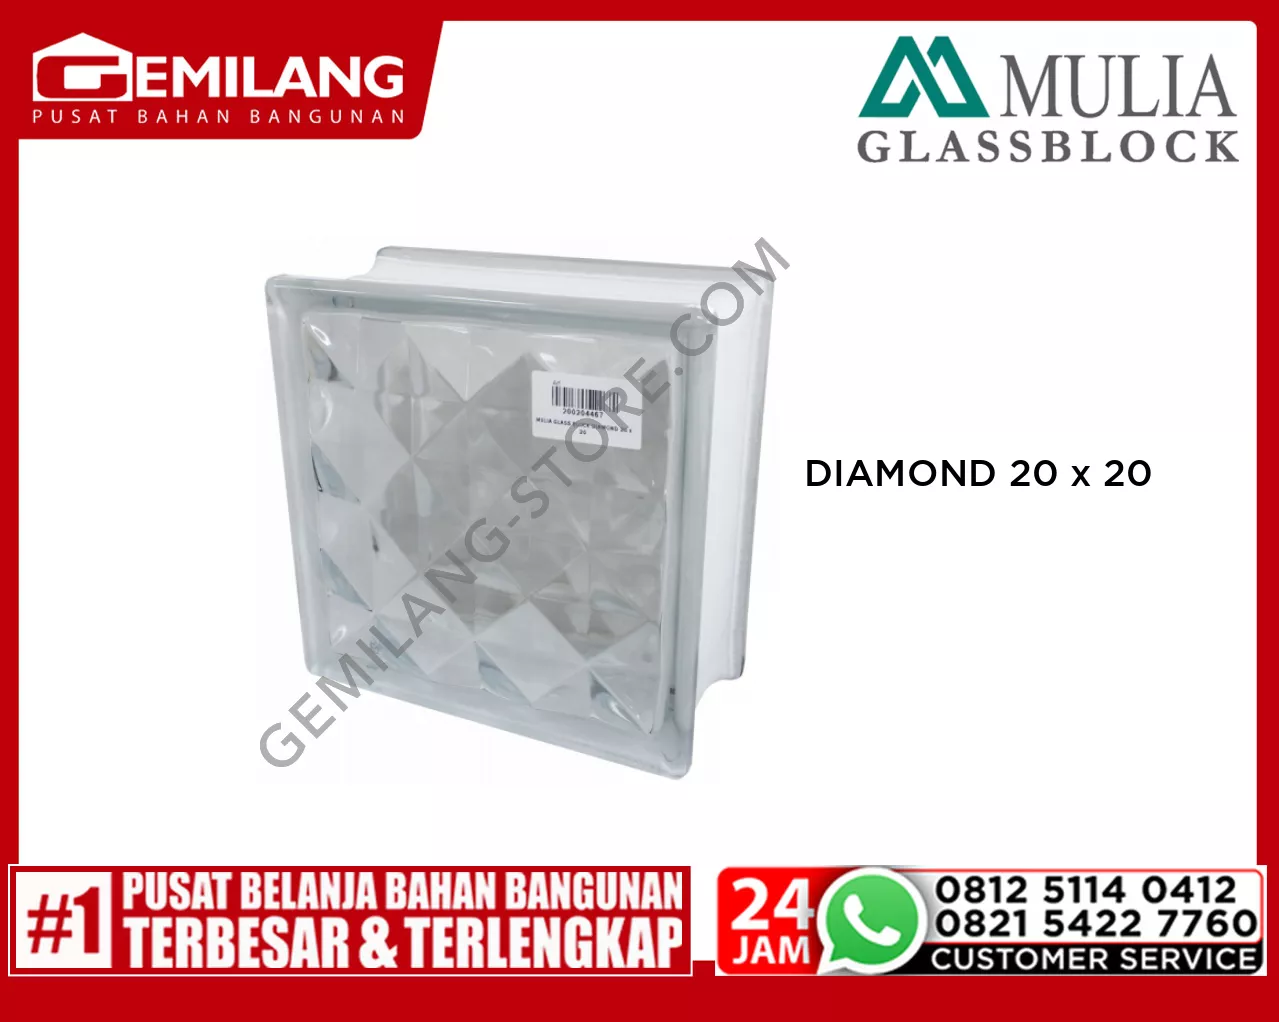 MULIA GLASS BLOCK DIAMOND 20 x 20